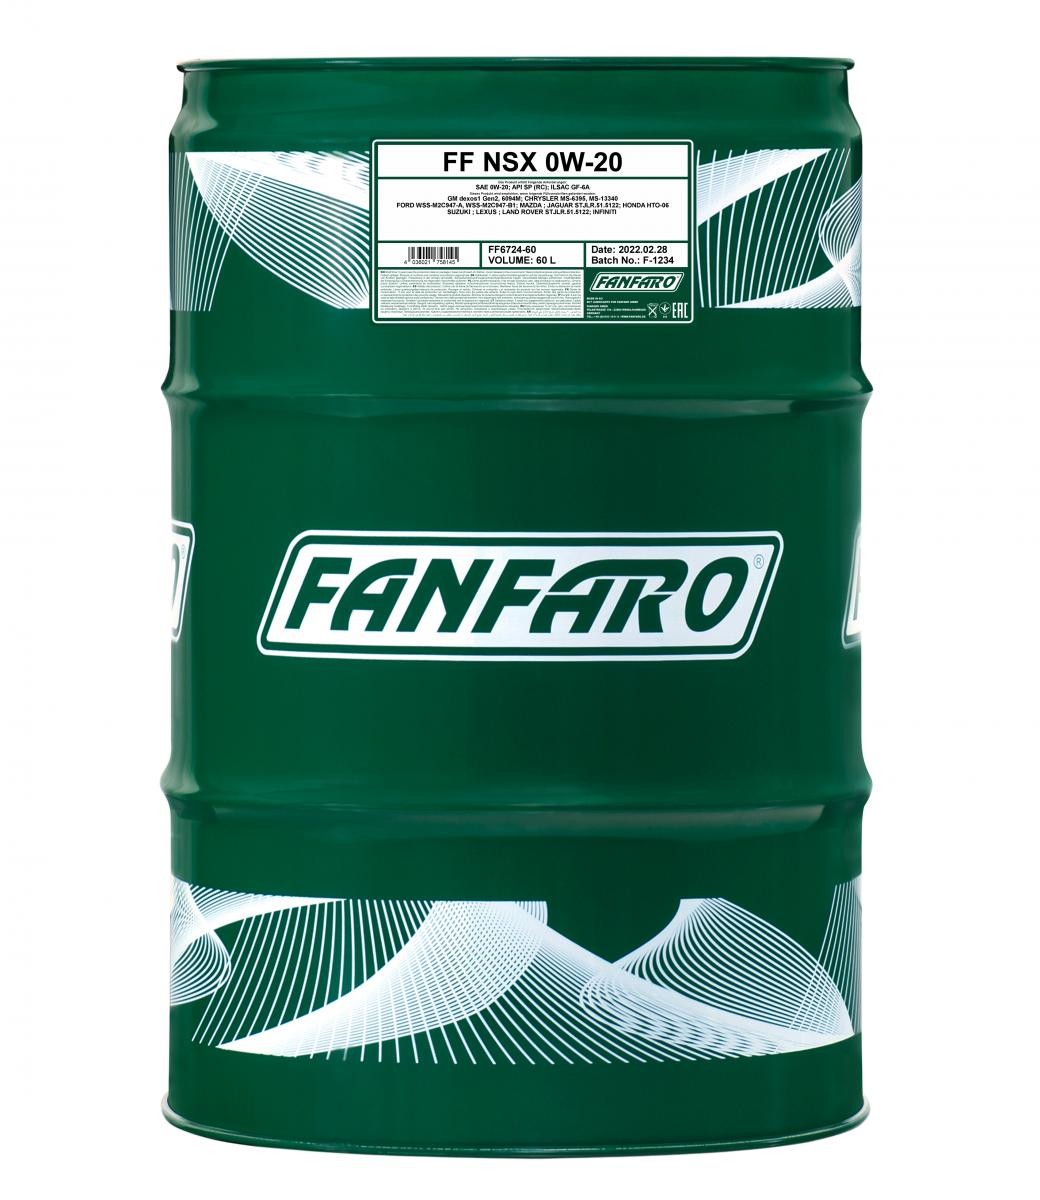 FF6724-60 FANFARO NSX 0W-20, 60l Motoröl FF6724-60 günstig kaufen